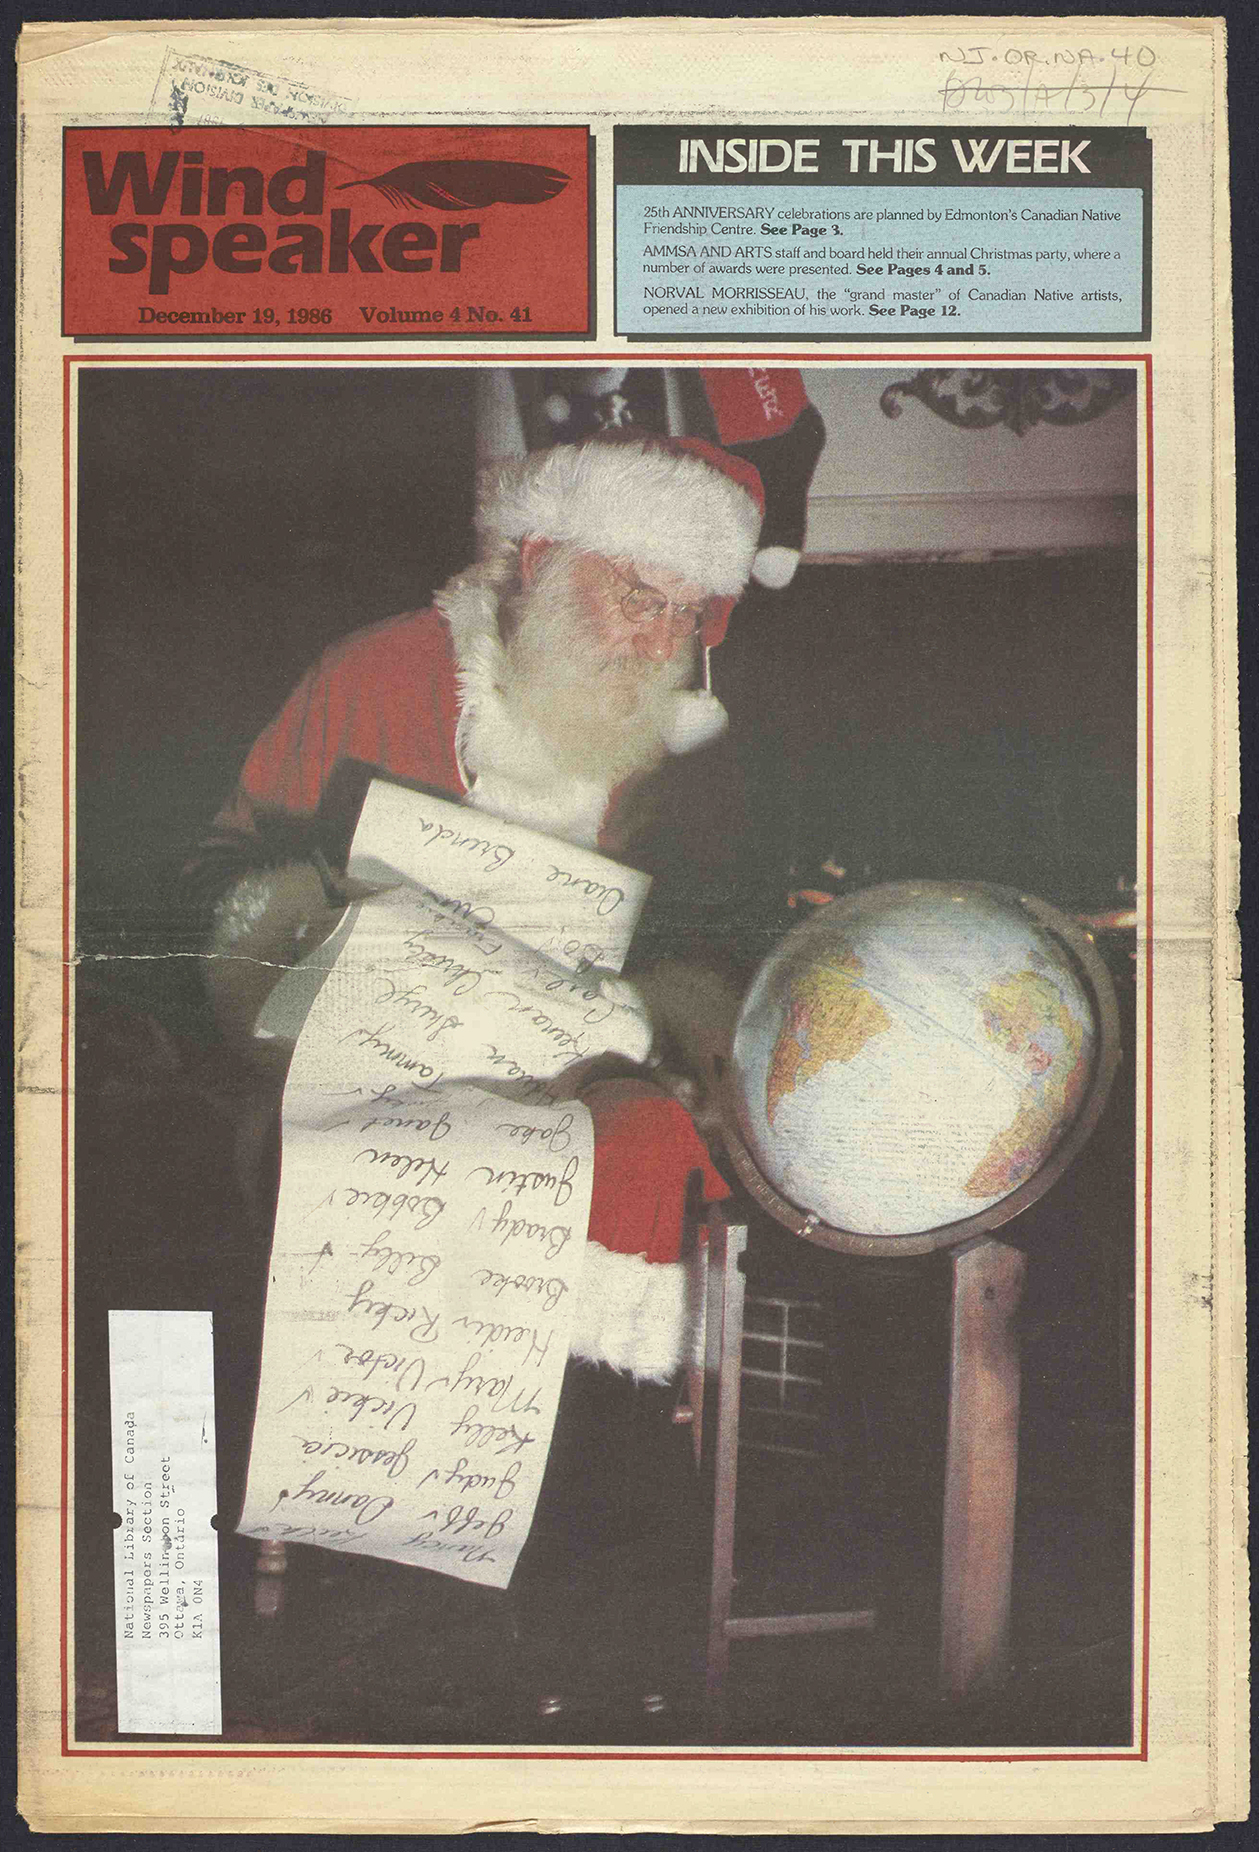 December 19, 1986